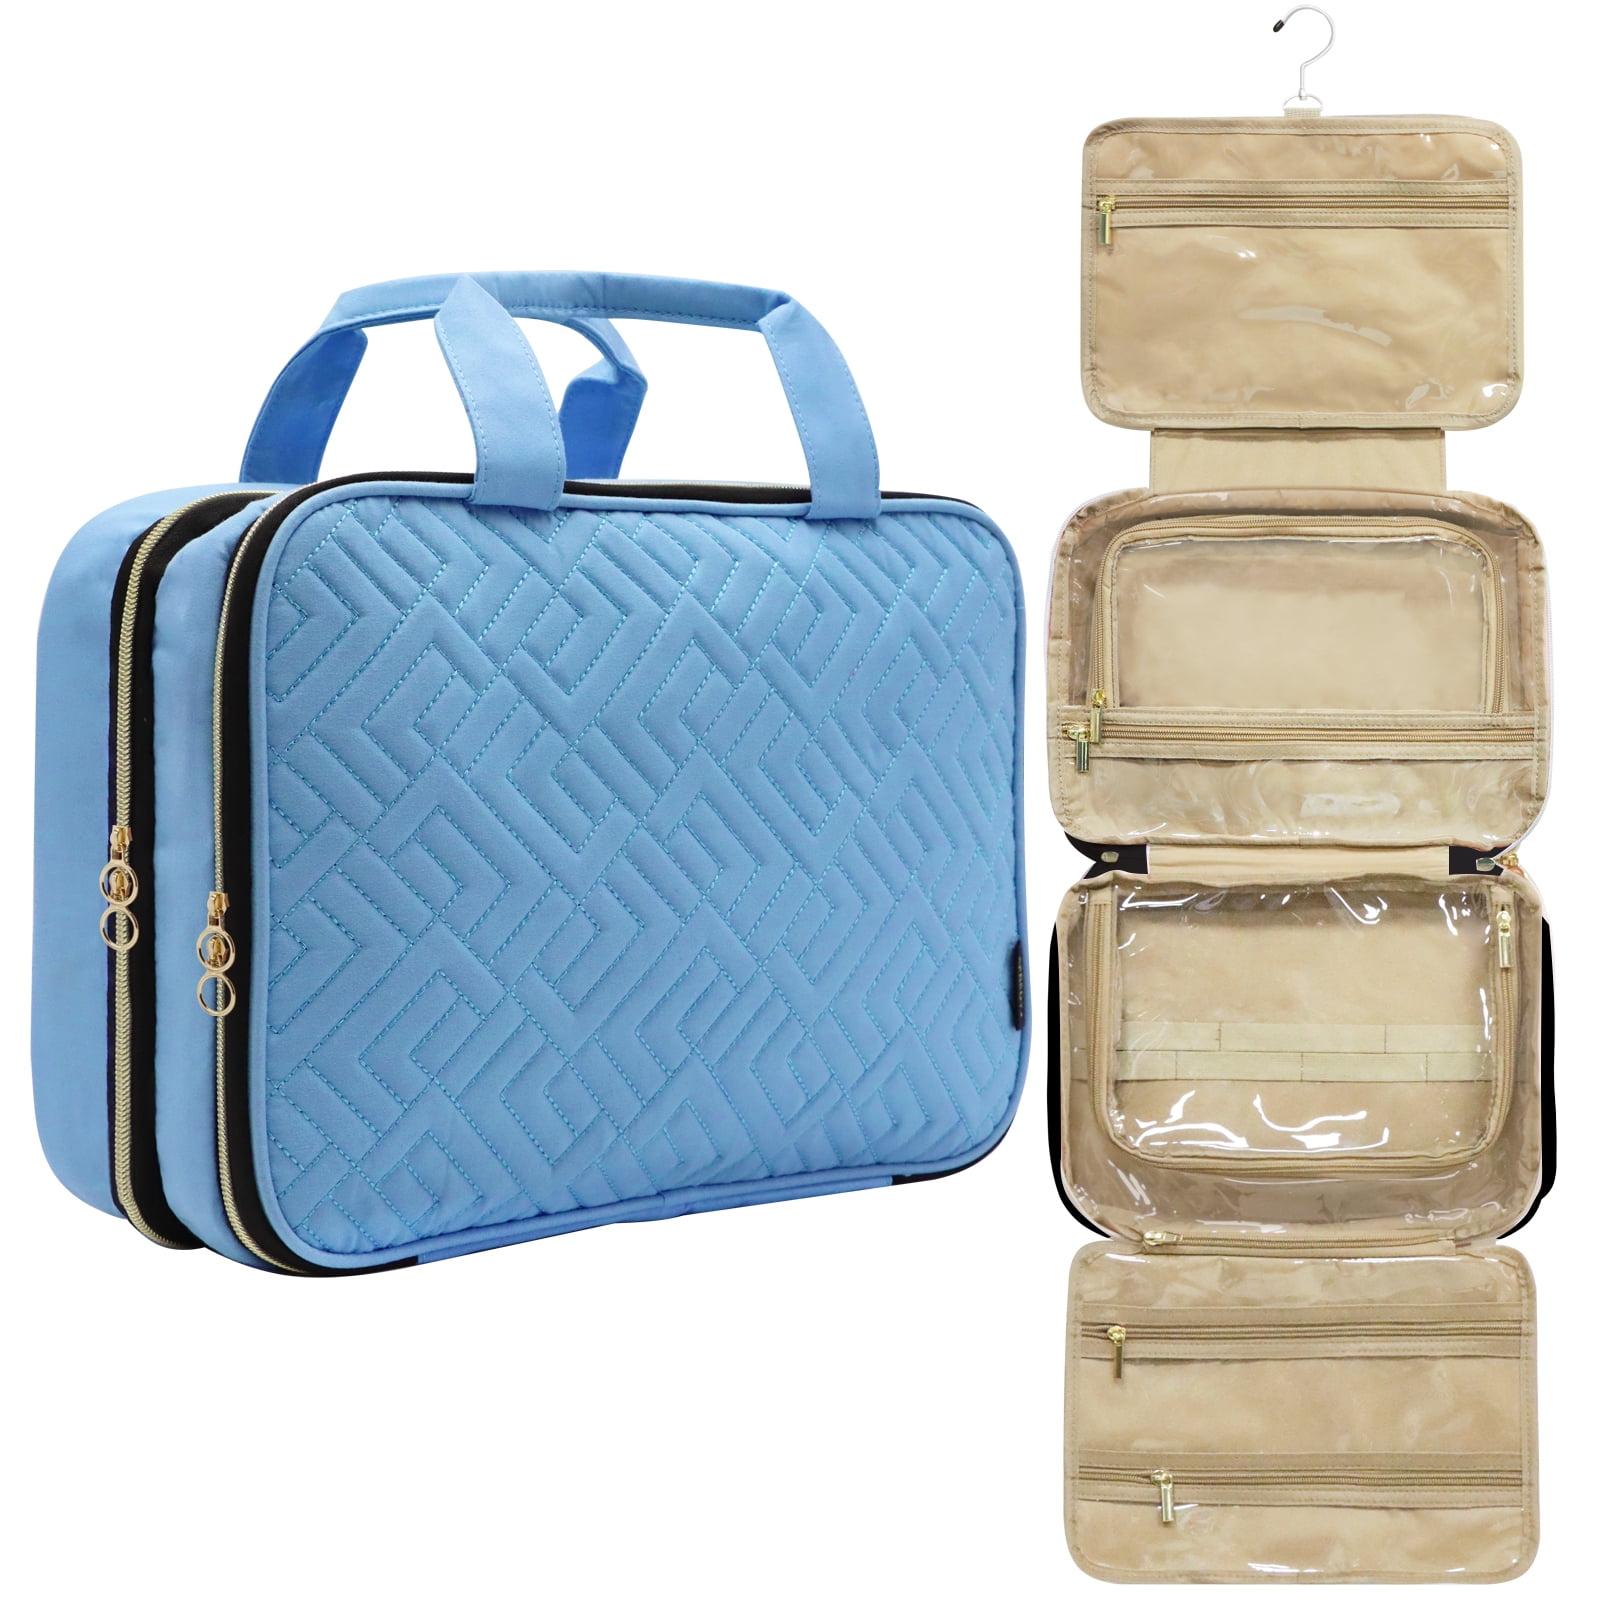 Fabric Travel Toiletry Bag